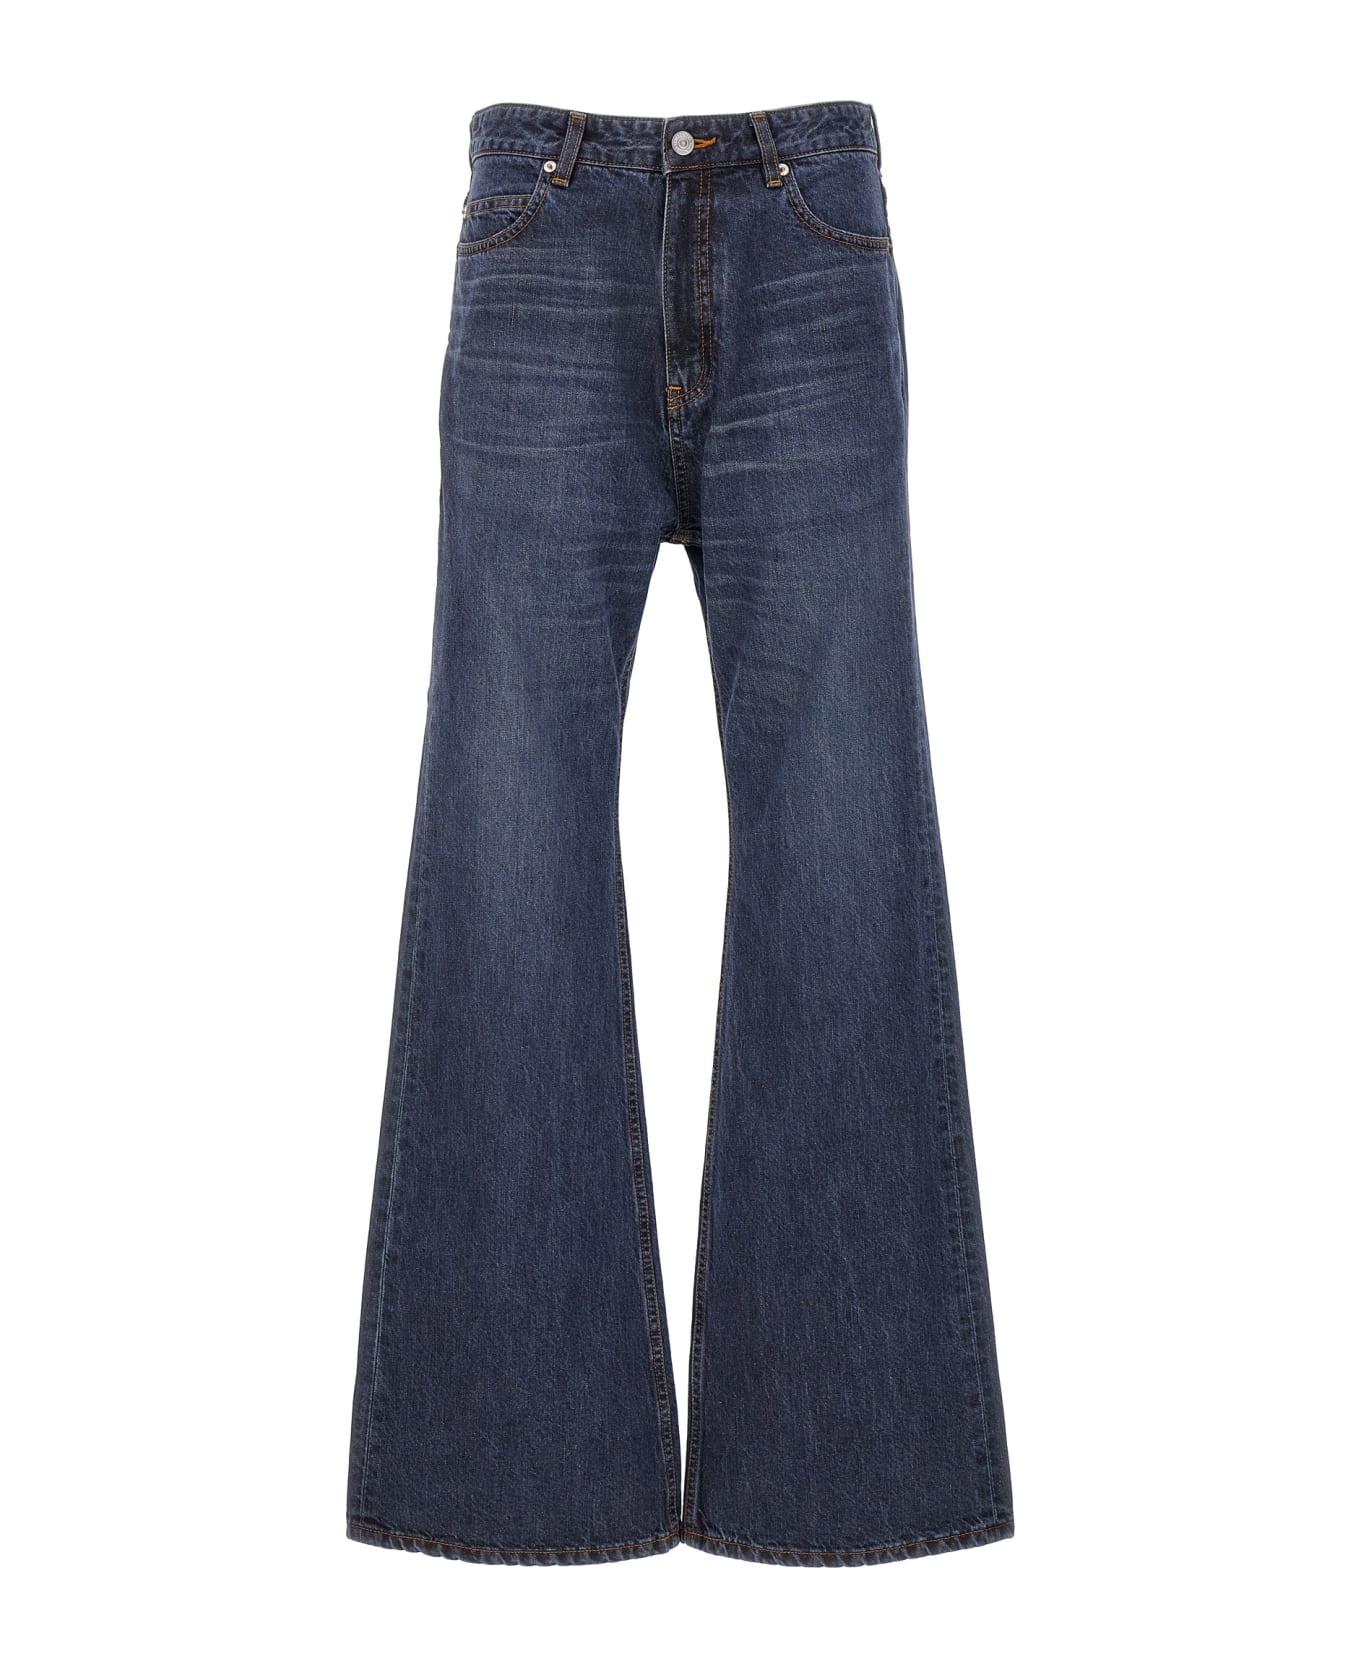 Balenciaga Flared Jeans - Blue